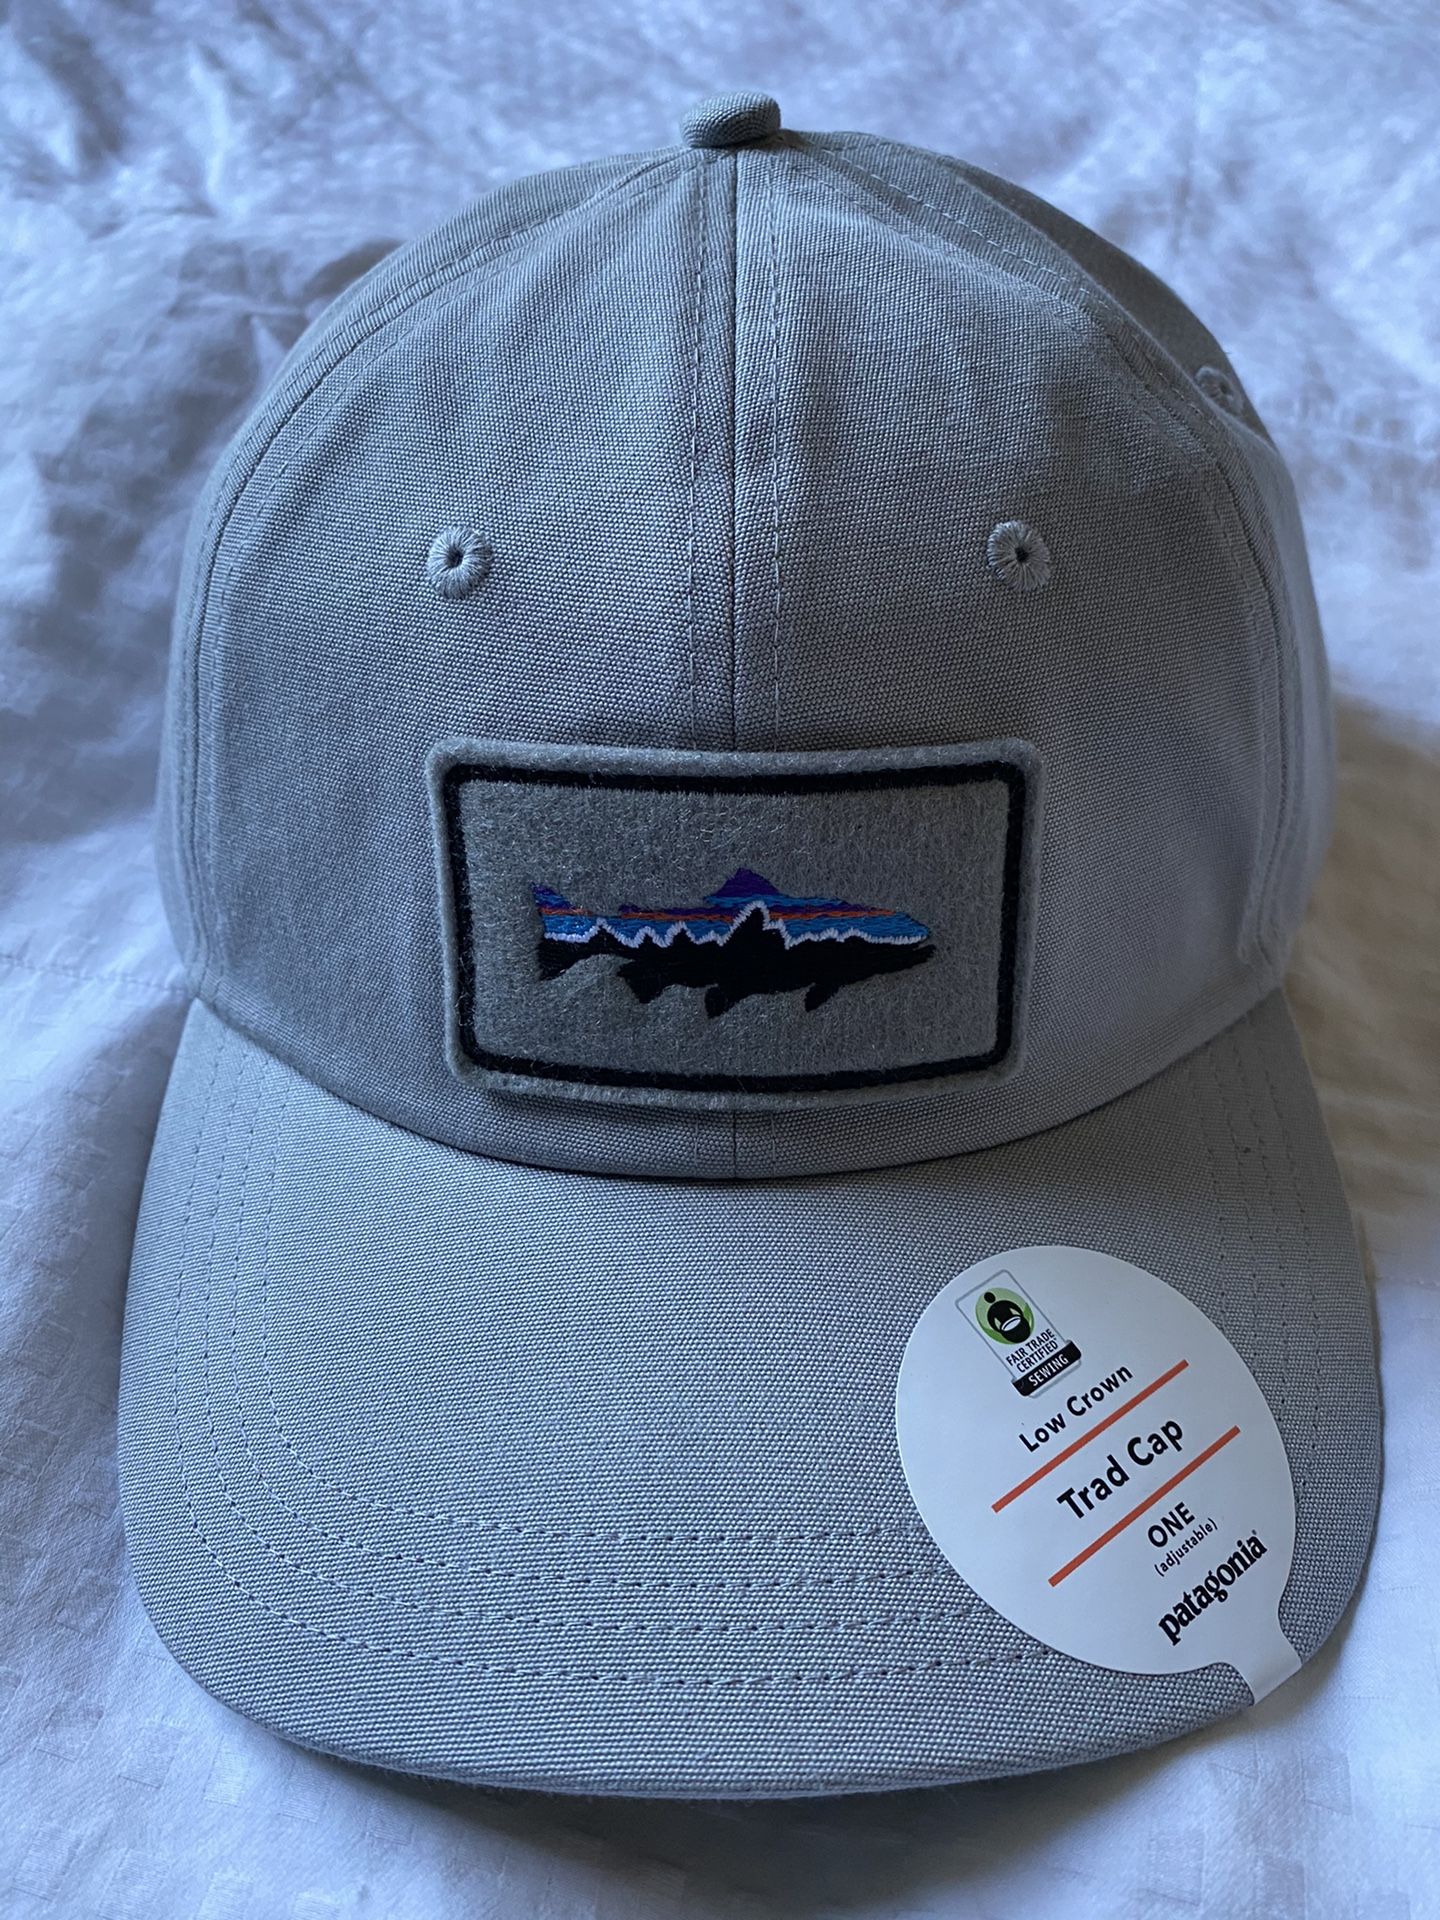 Patagonia hat brand new